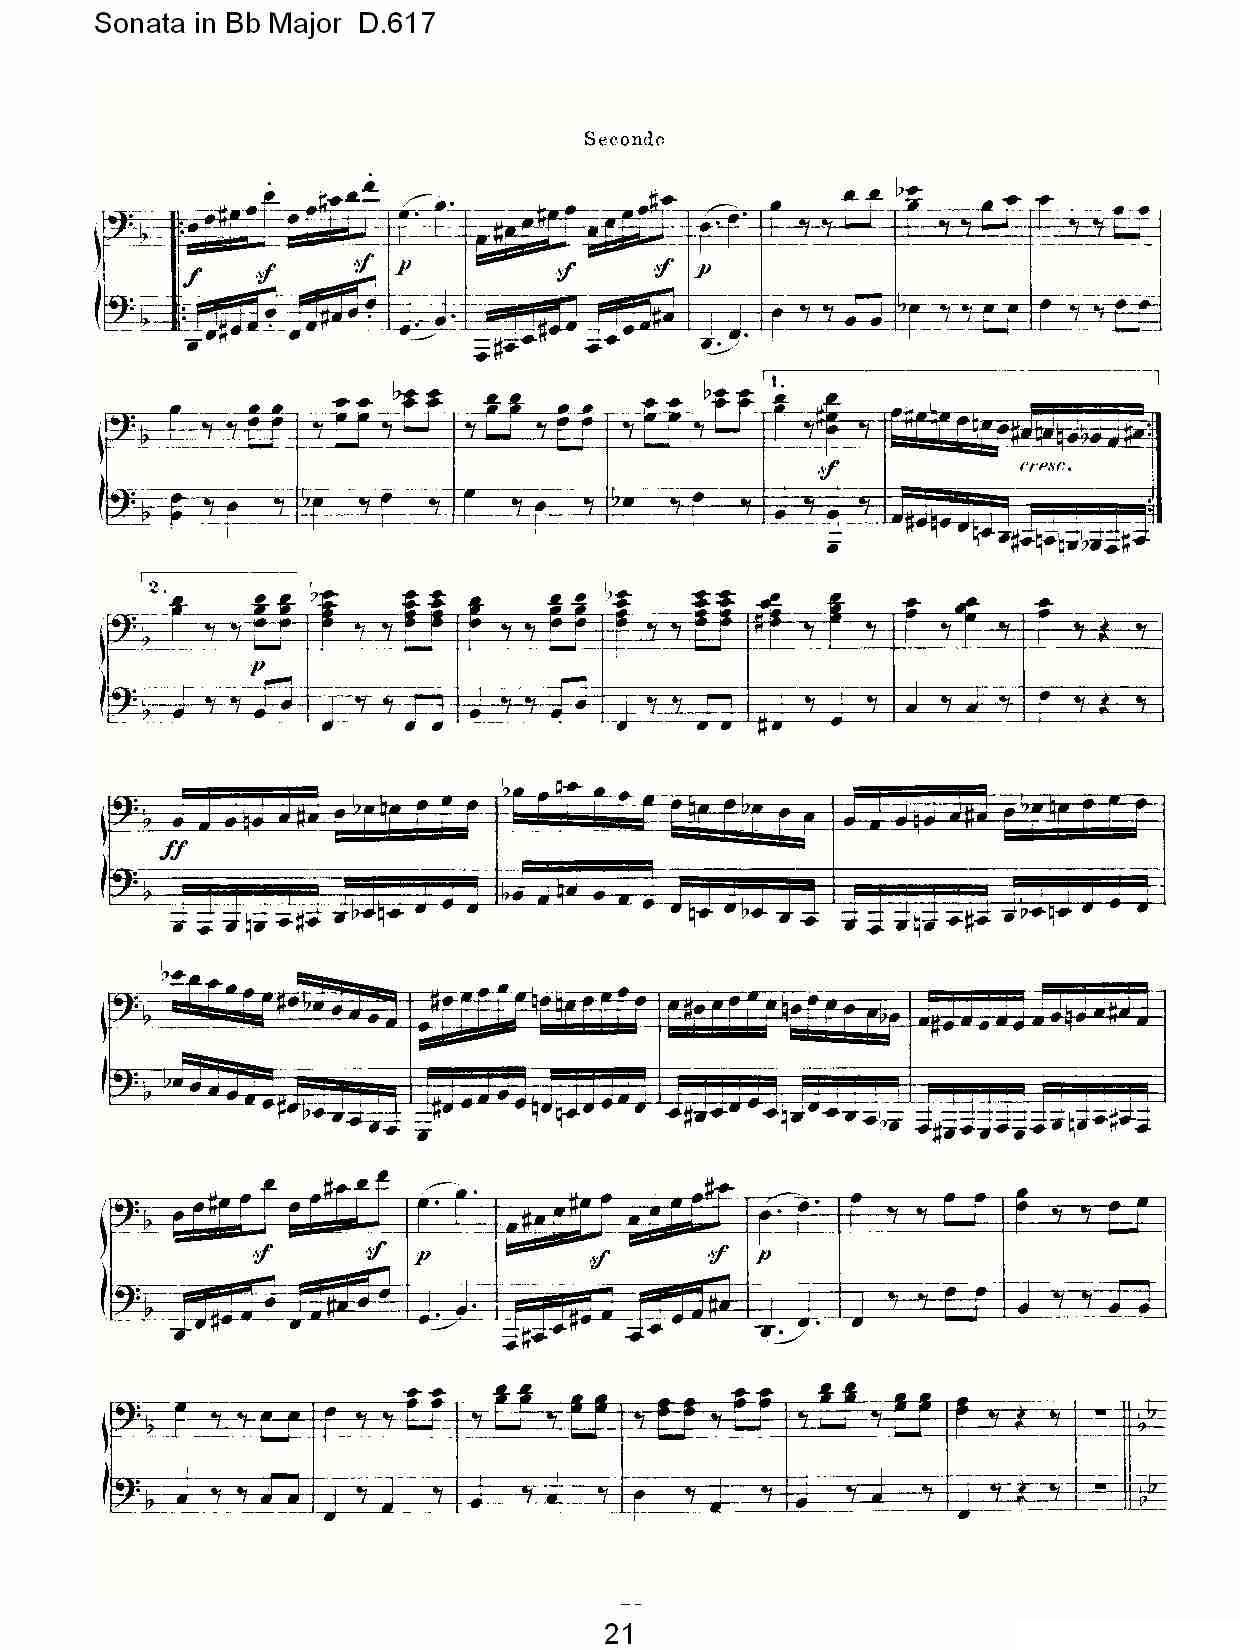 Sonata in Bb Major D.617（Bb大调奏鸣曲 D.617）钢琴曲谱（图21）